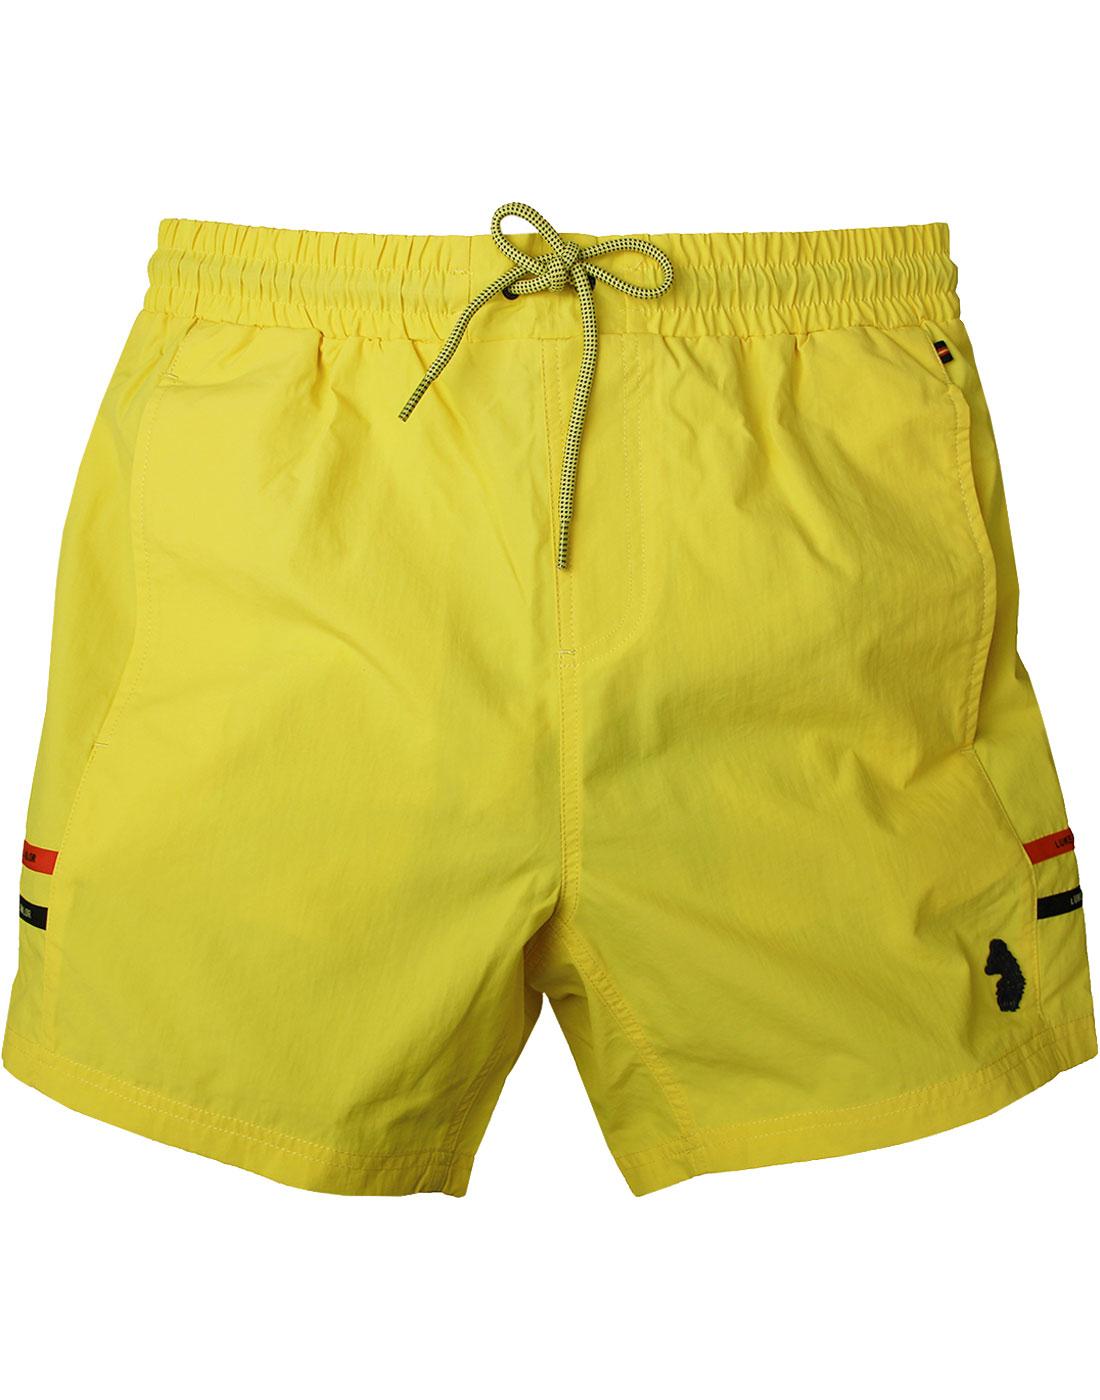 LUKE 1977 SPORT Ragy Men's Retro Swim Shorts in Lemon